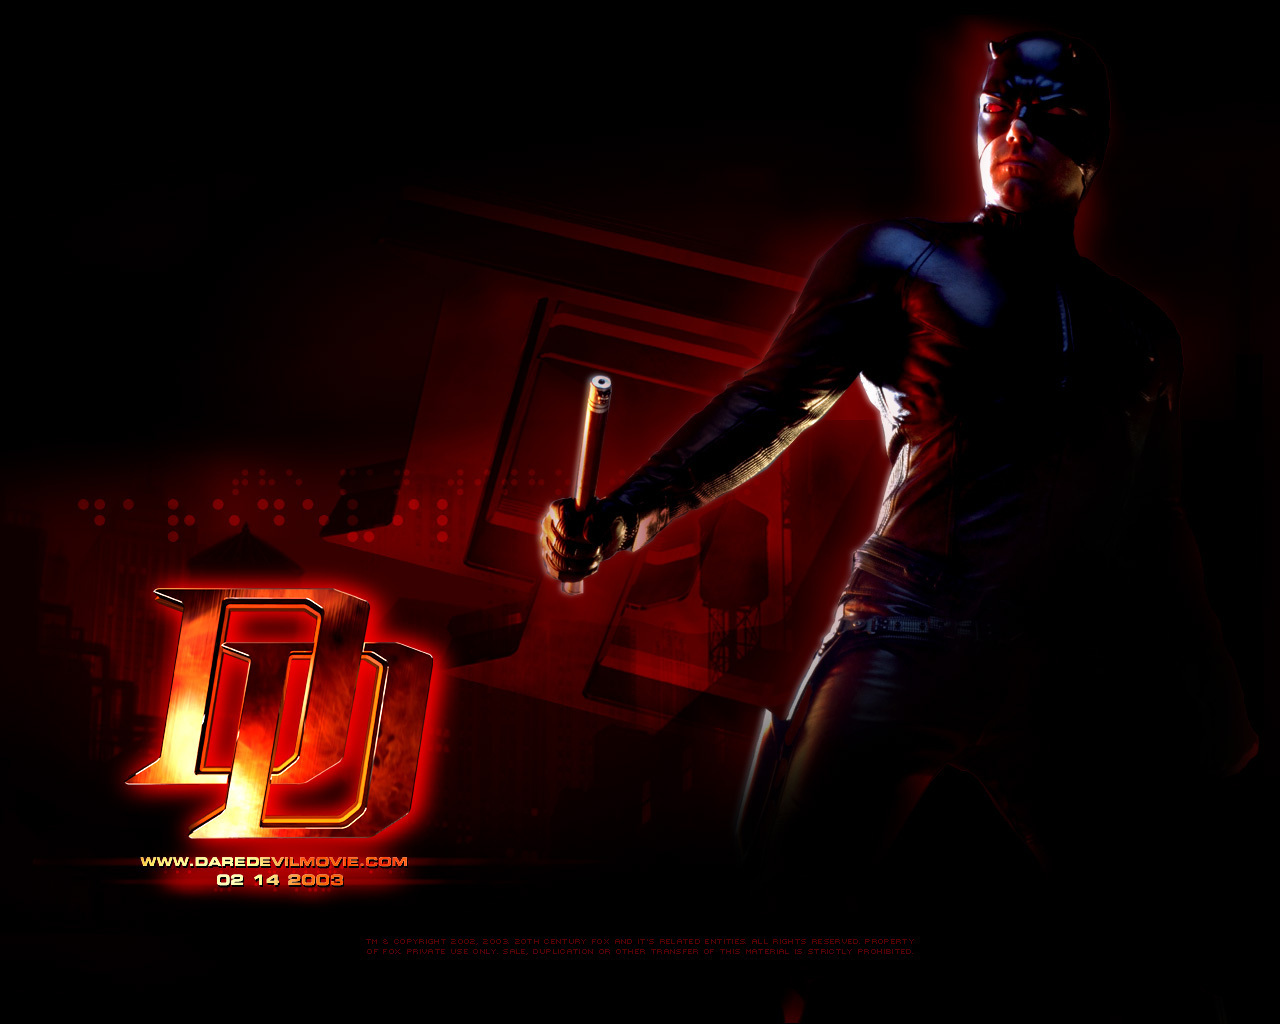 Daredevil movies